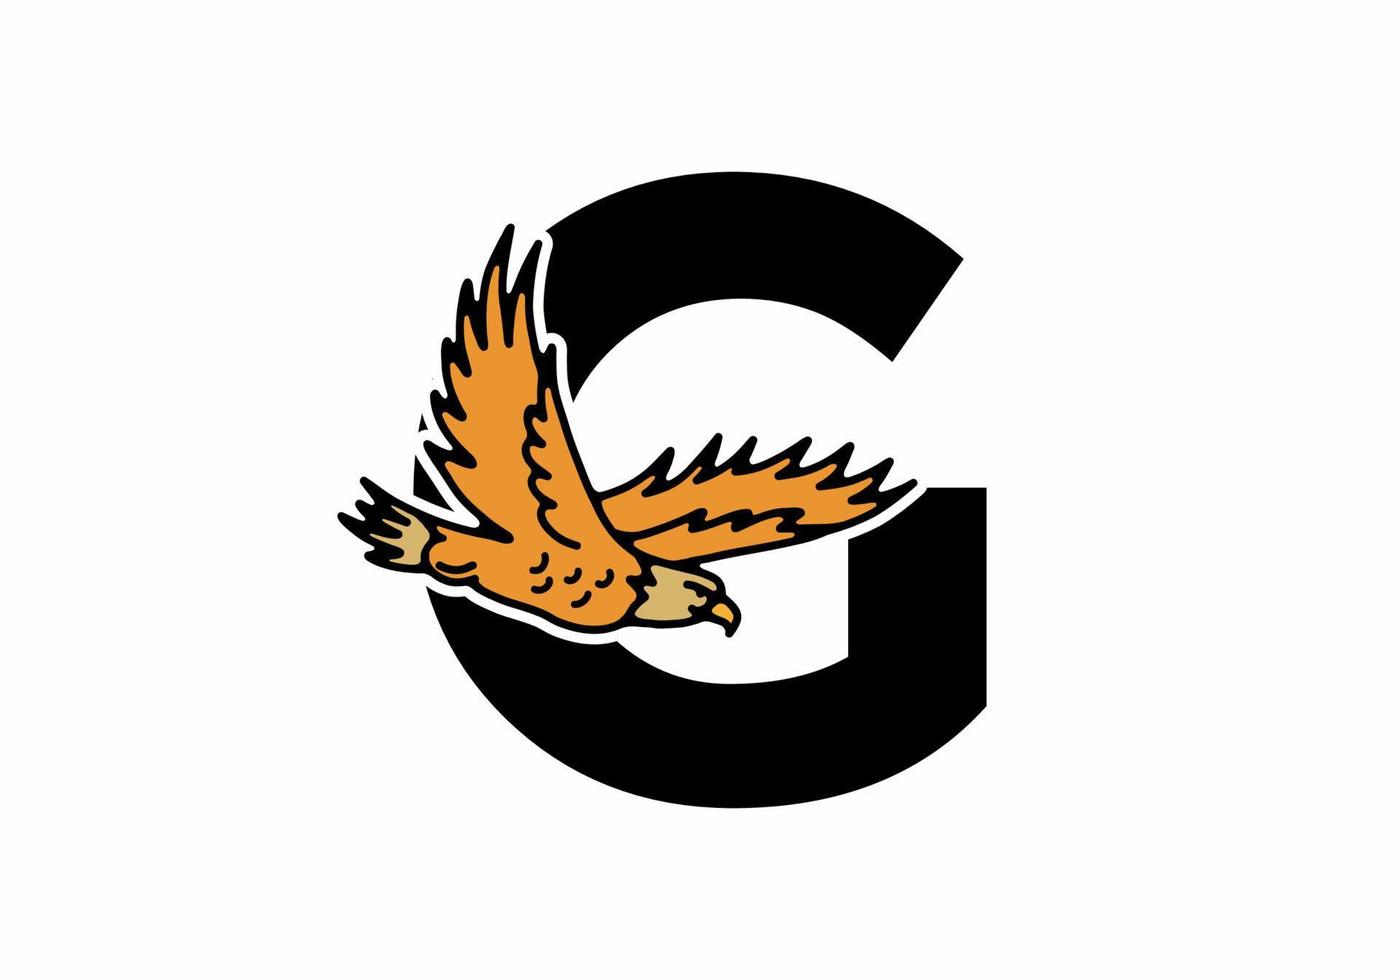 ilustración de arte lineal de águila voladora con letra inicial g vector